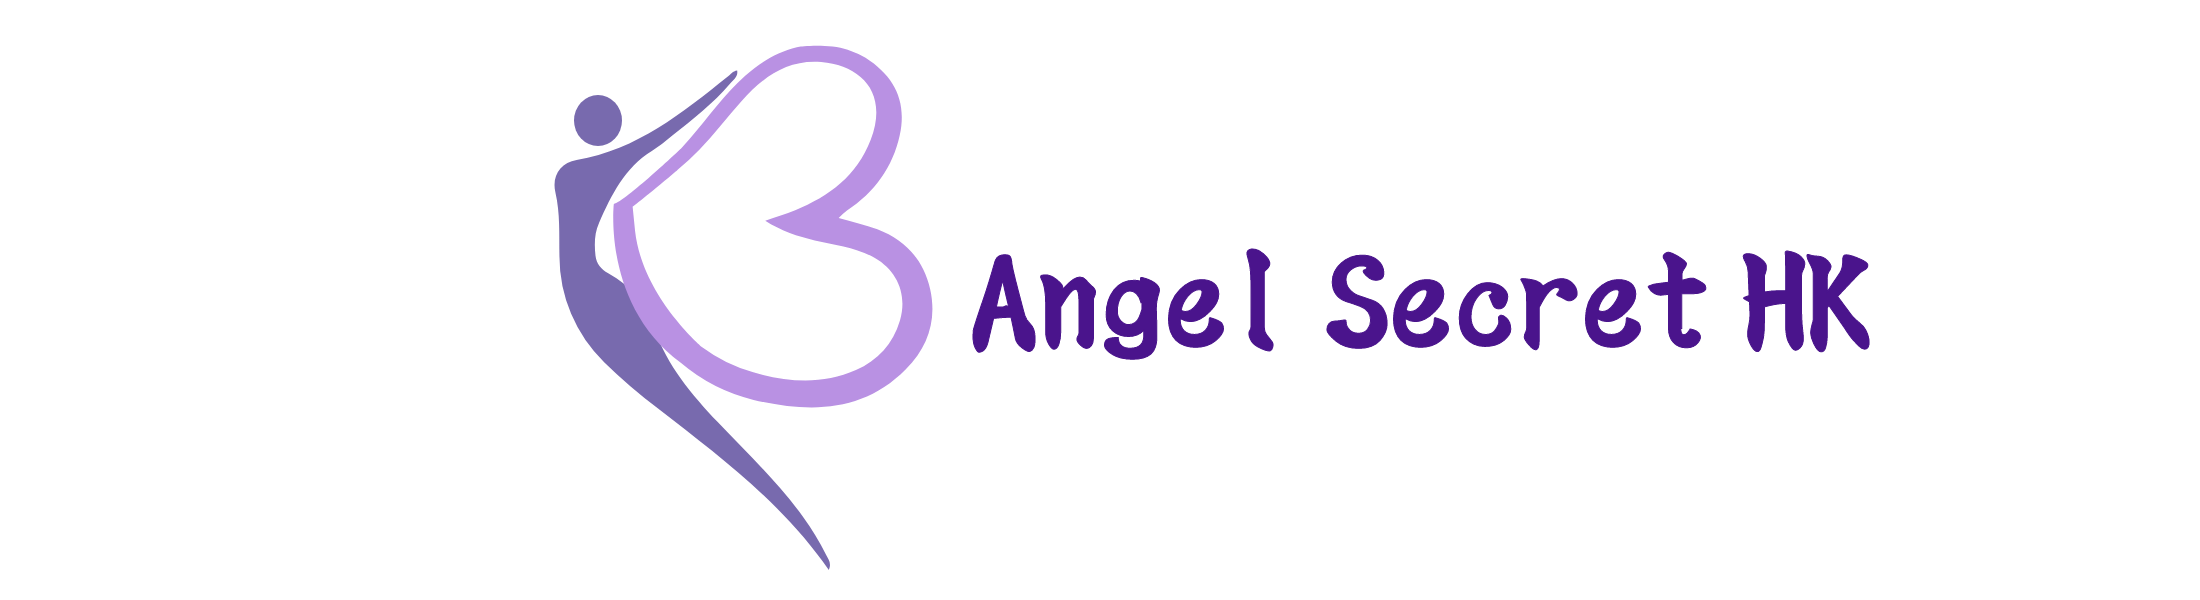 Angel Secret HK